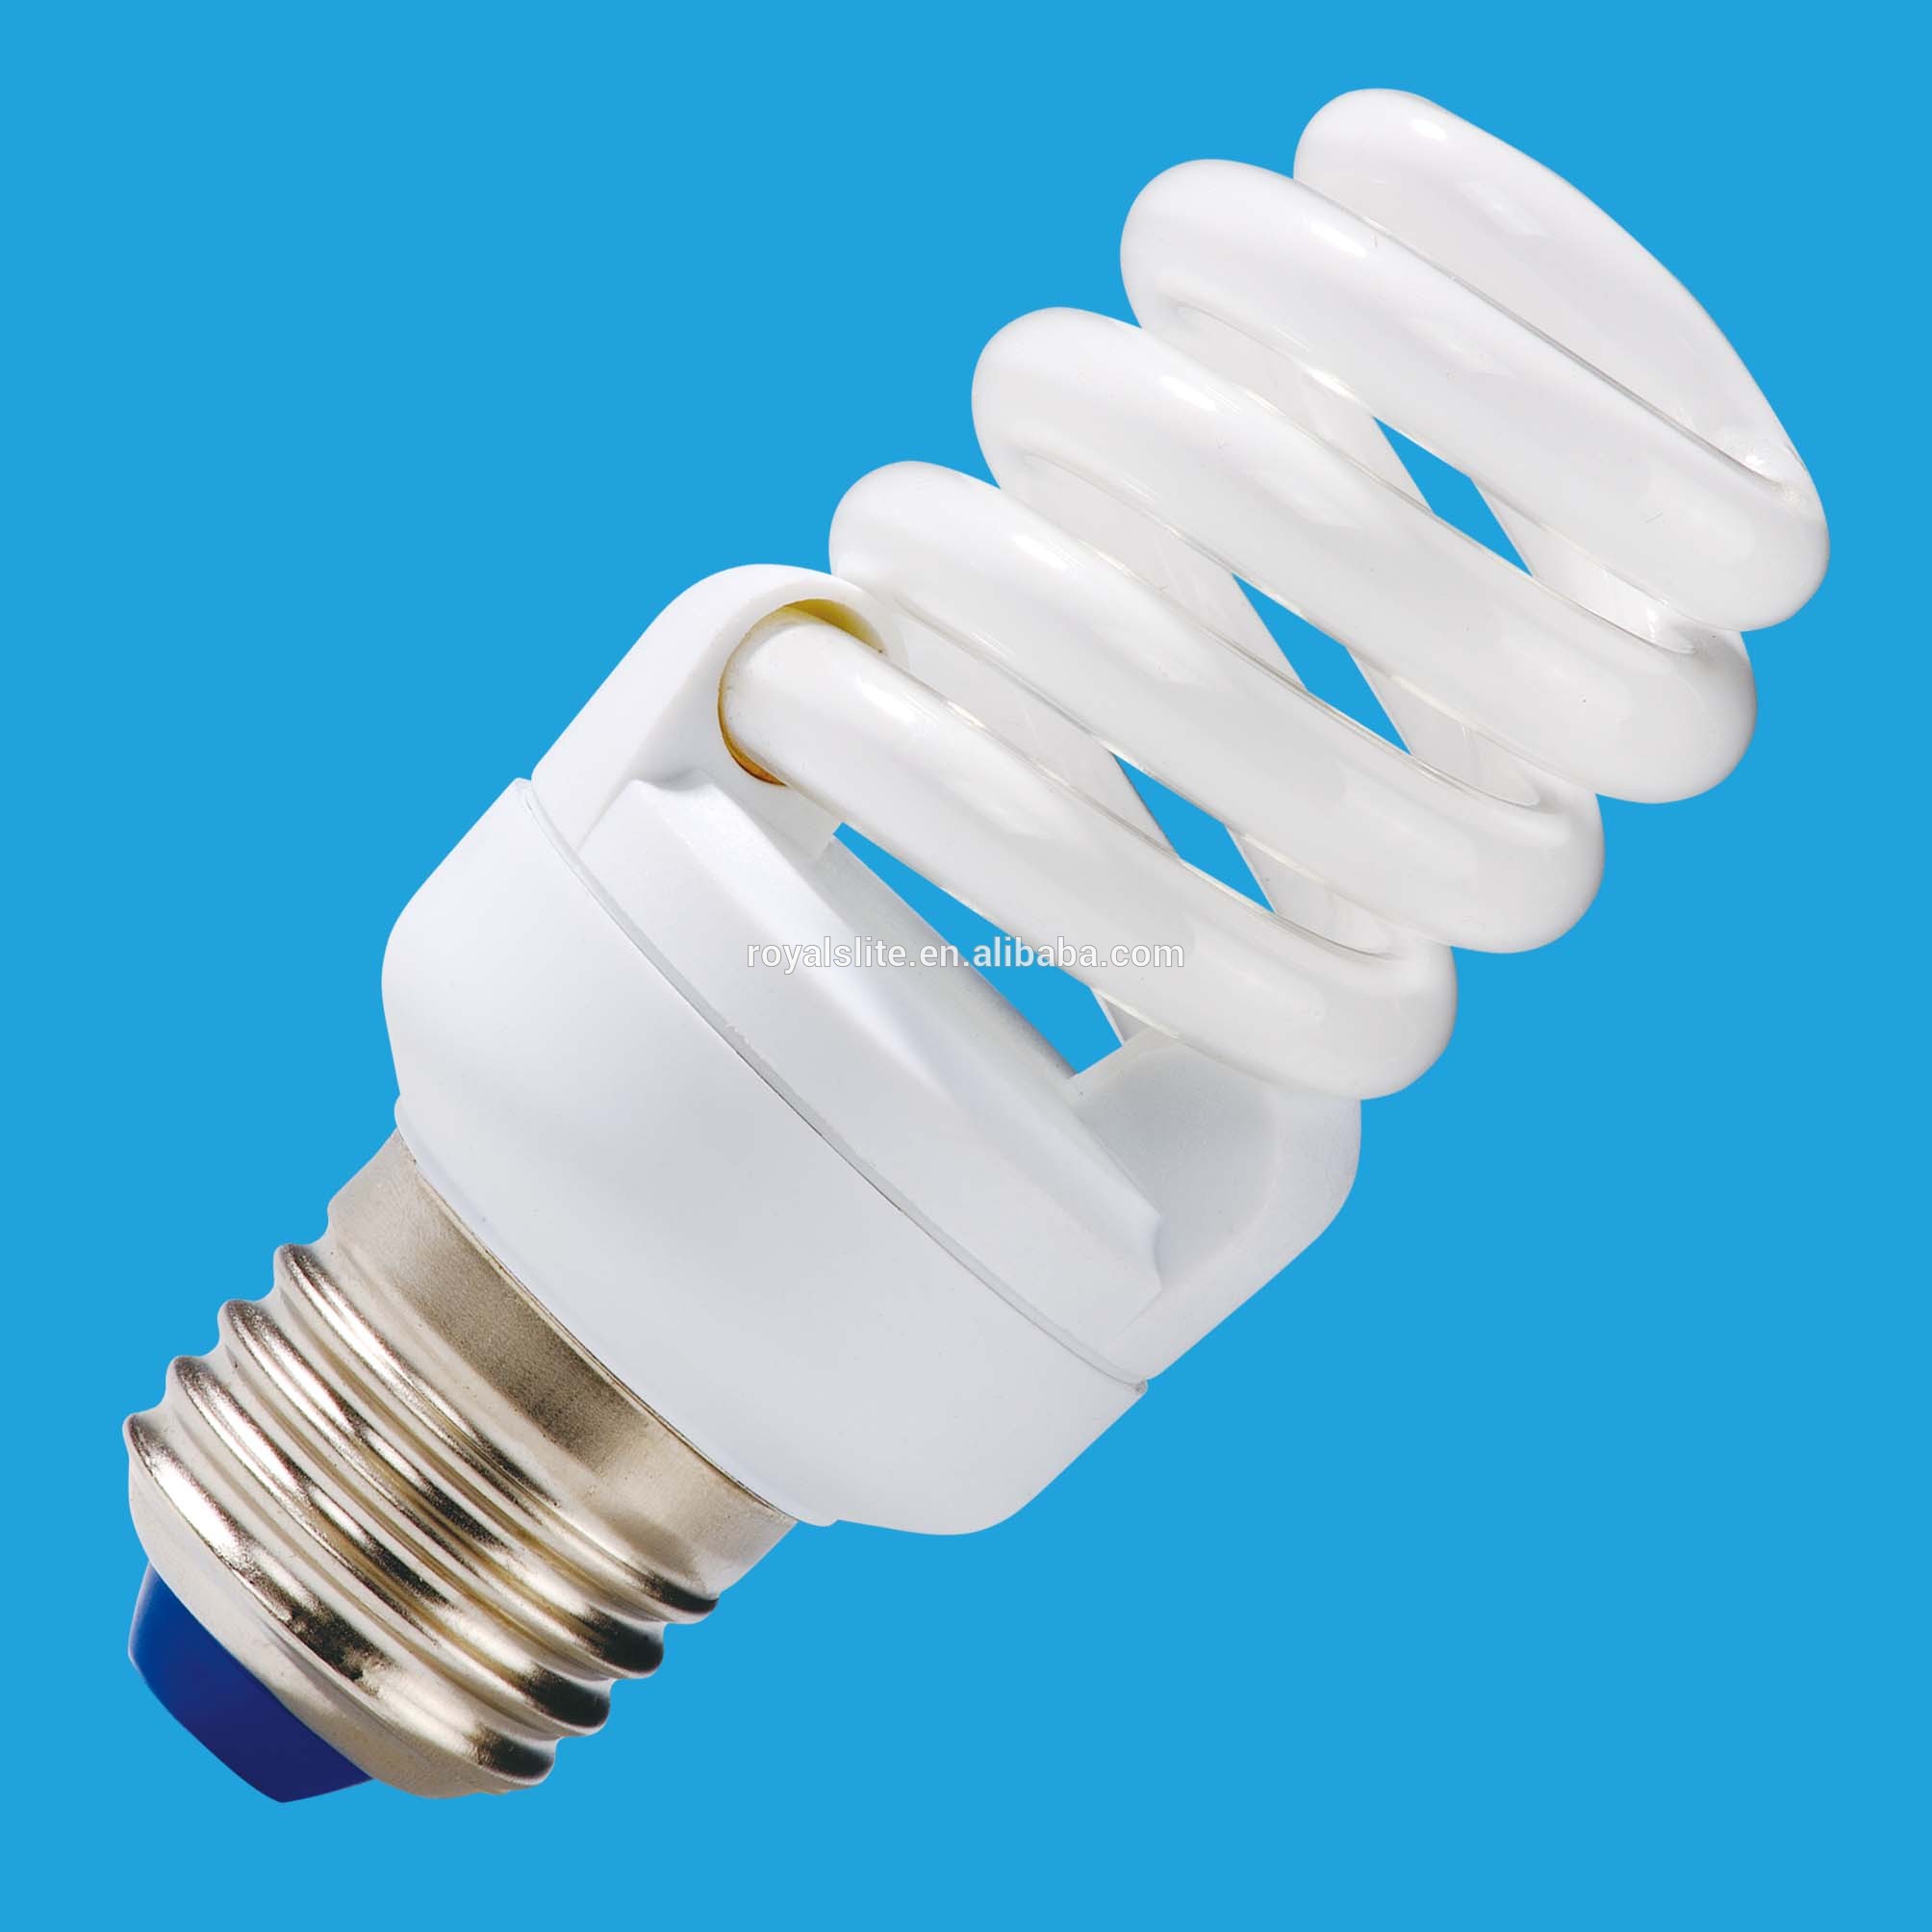 NEW led lights home E27 led bulb A19 A60 energy saving LED edison bulb